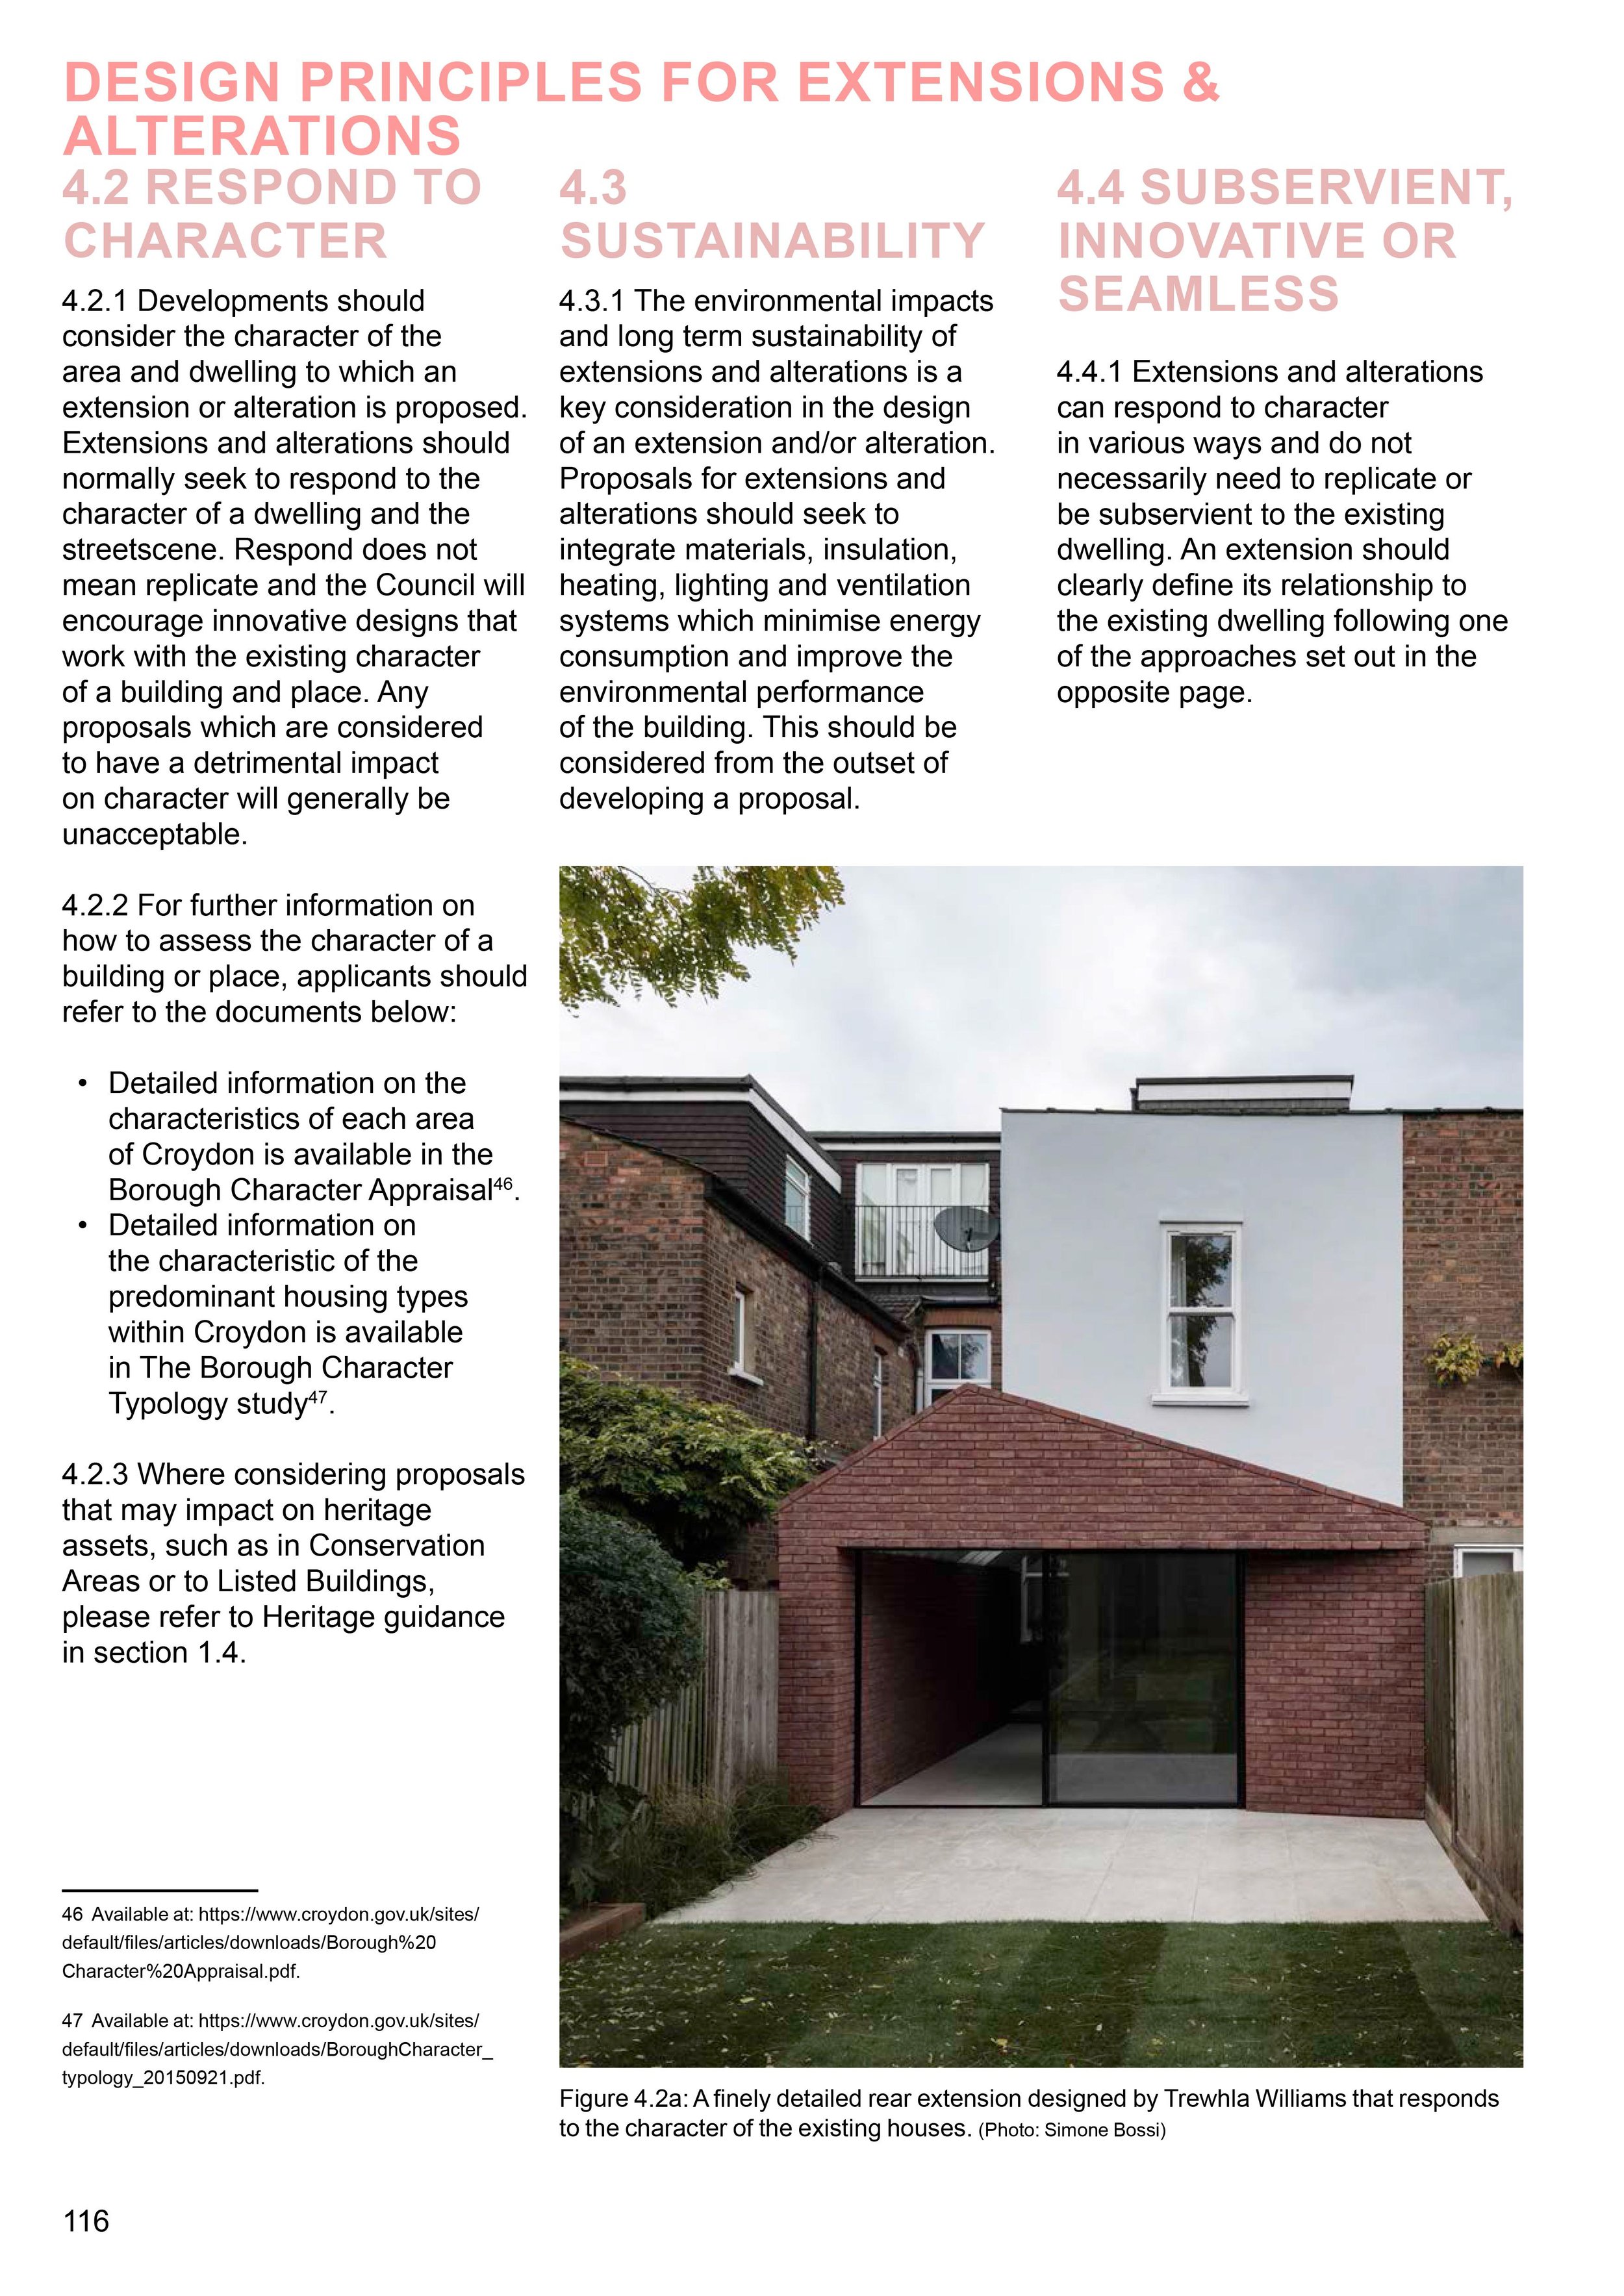 Trewhela-Williams_Press_Croydon_Residential_Design_Guide_2.jpg